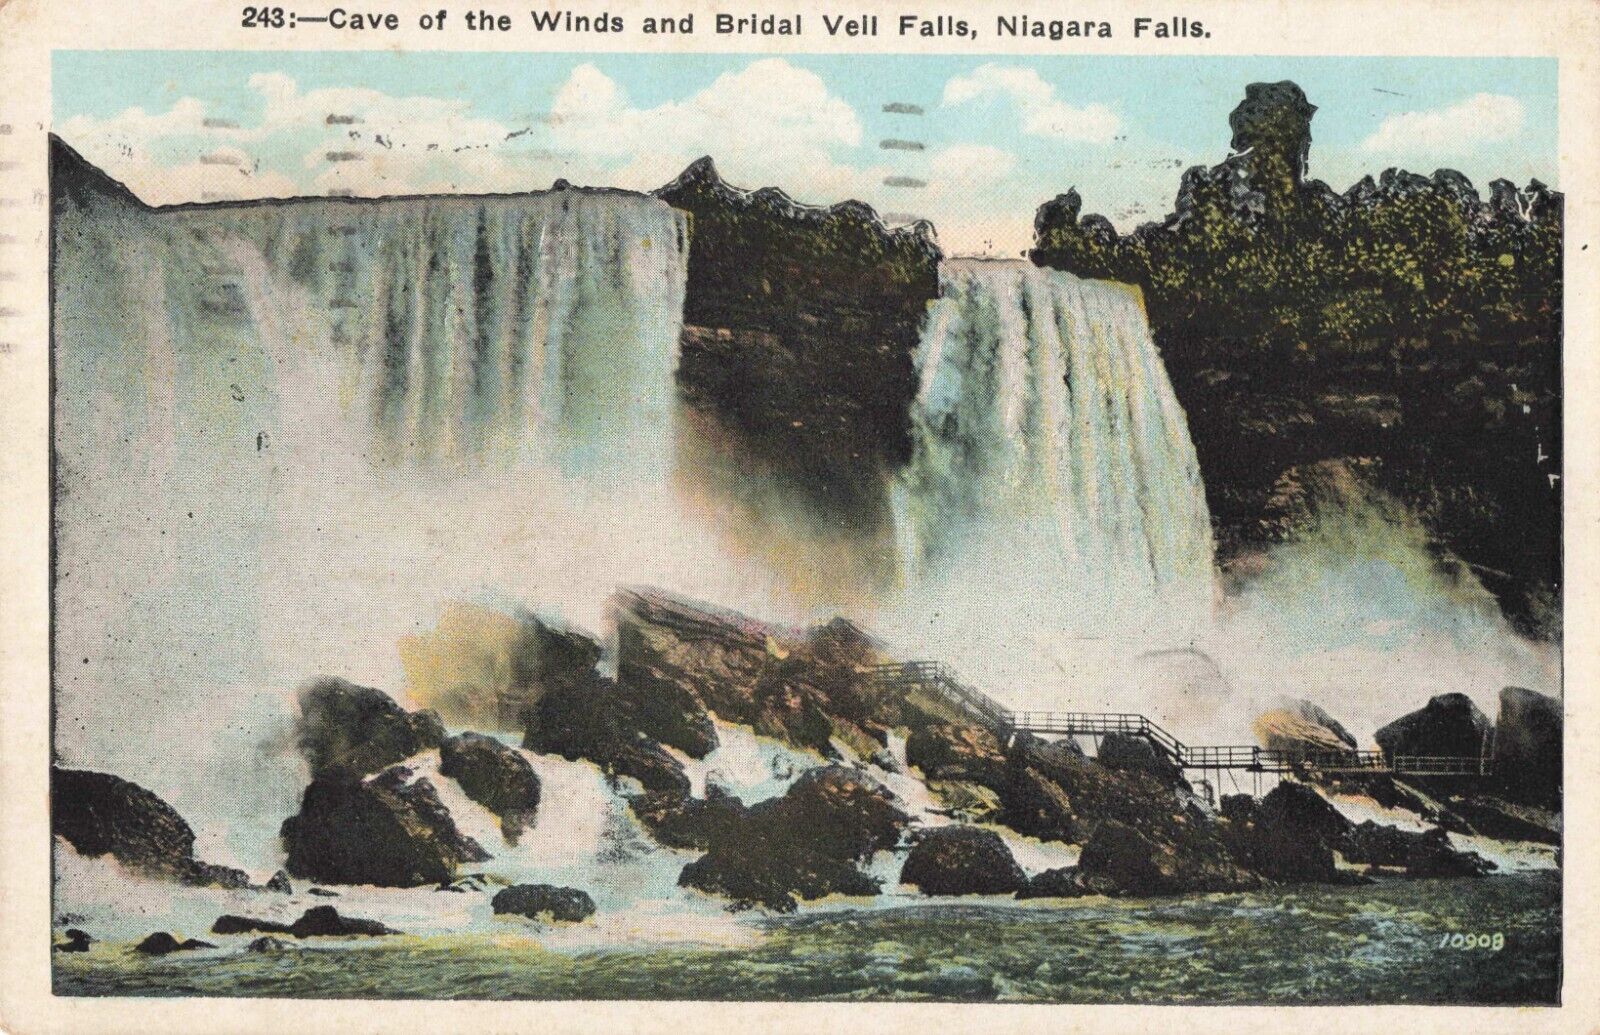 Niagara Falls New York, Cave of the Winds & Bridal Veil Falls, Vintage Postcard